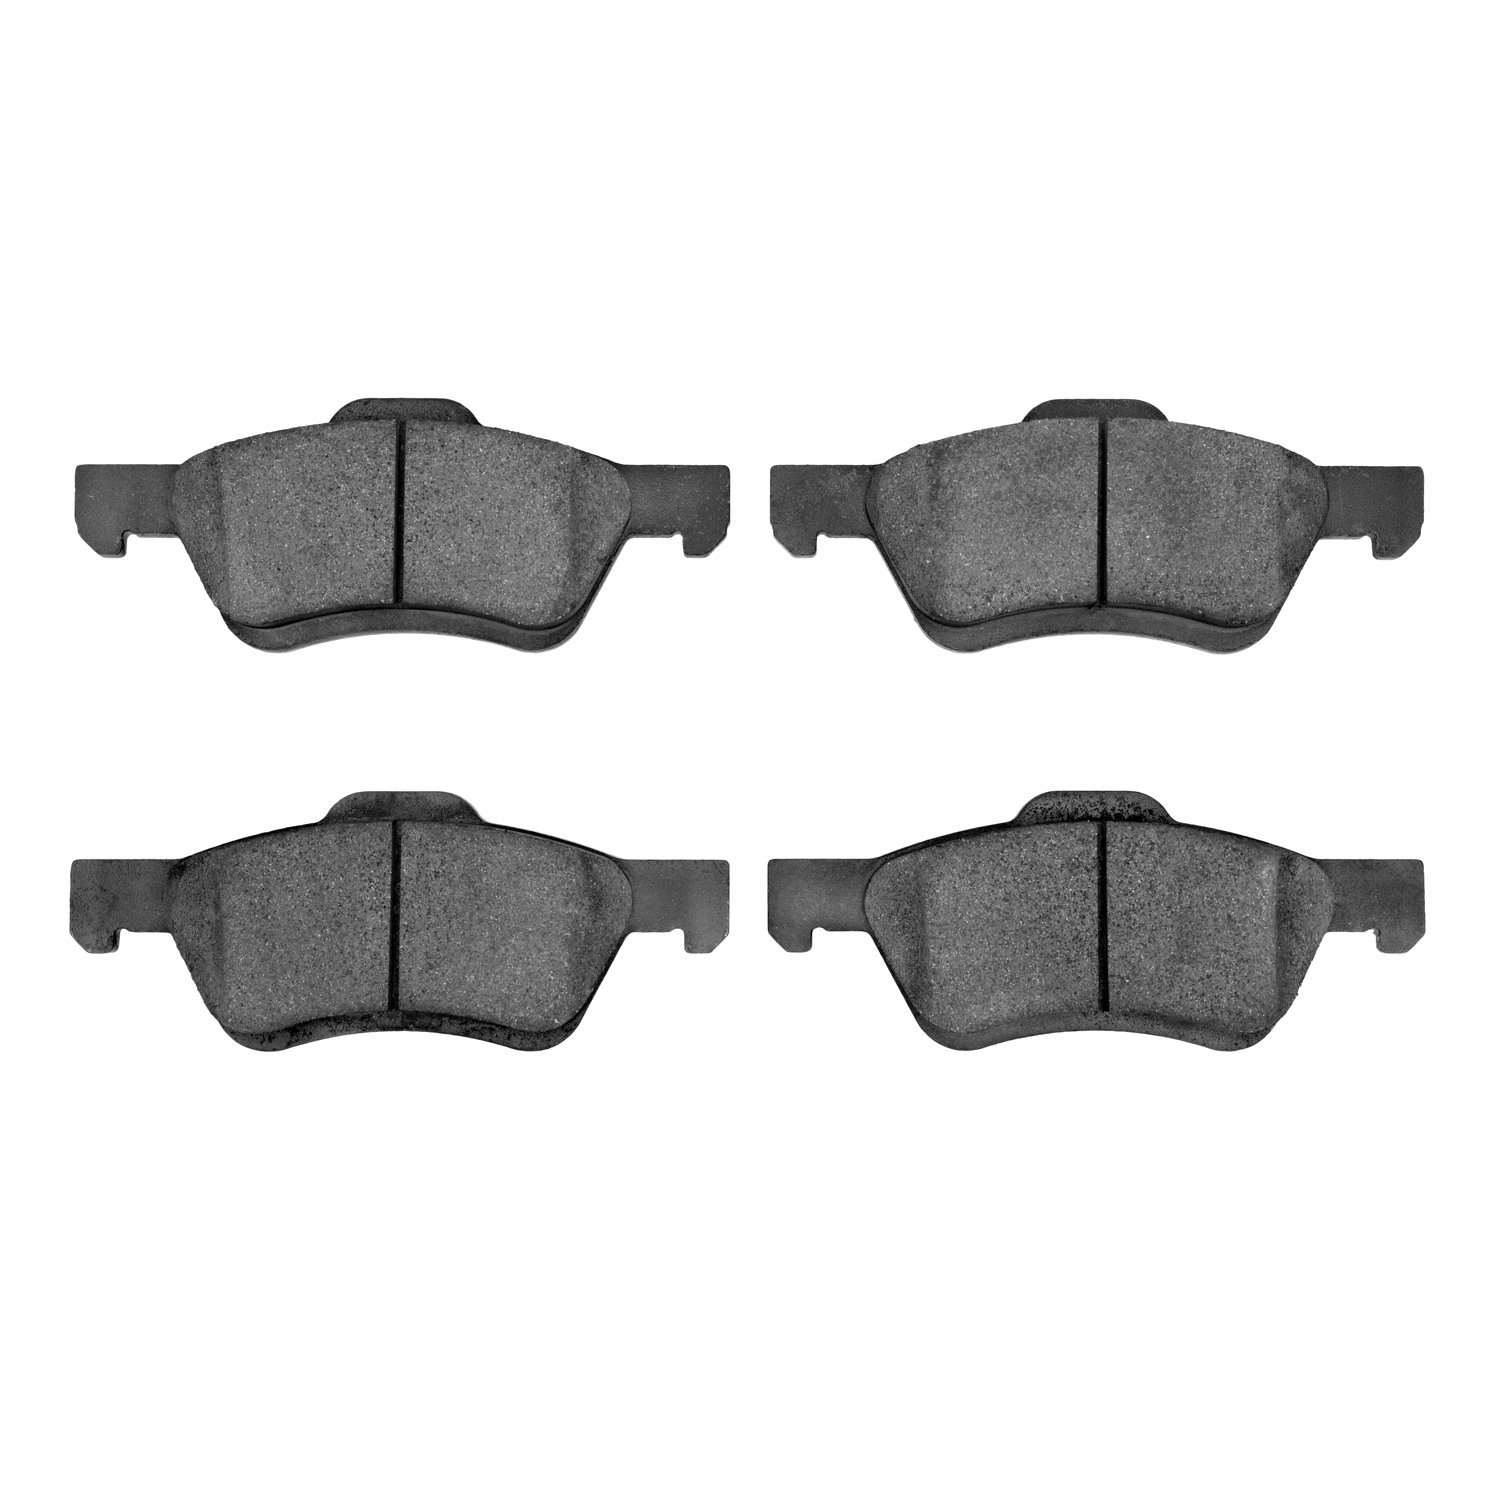 1551-1047-30 5000 Advanced Ceramic Brake Pads, 2009-2012 Ford/Lincoln/Mercury/Mazda, Position: Front